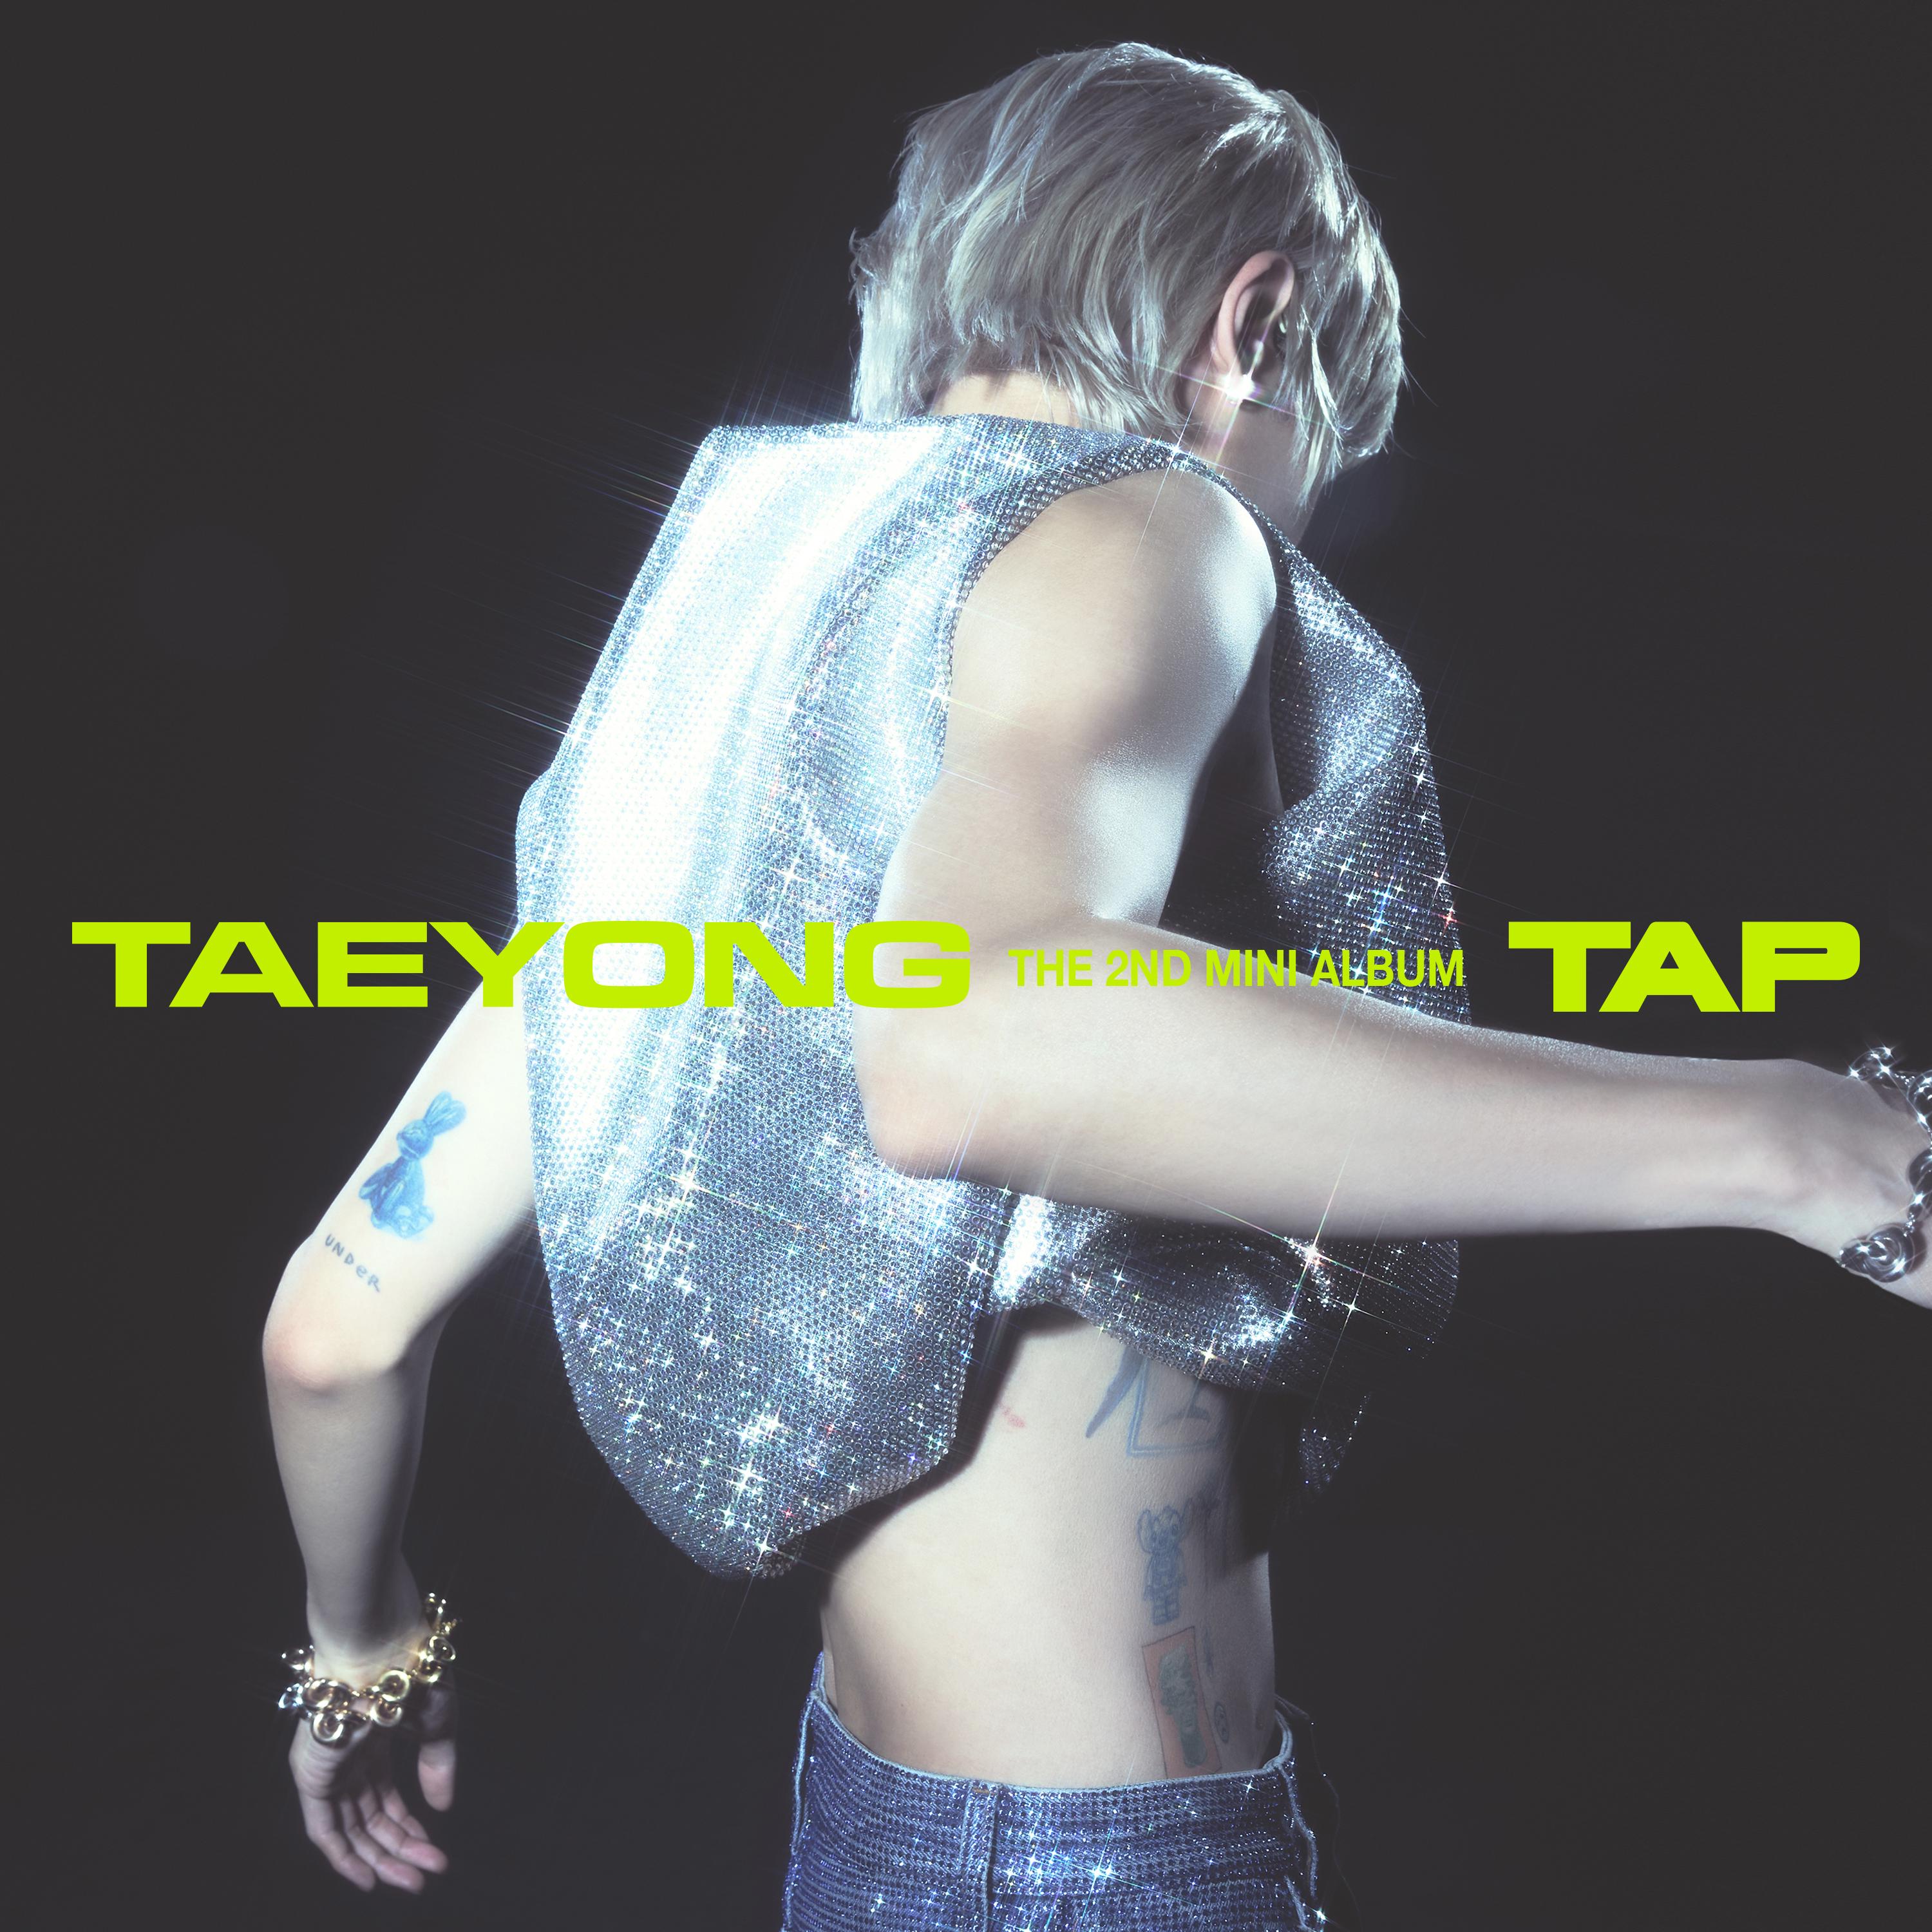 TAEYONG — Moon Tour cover artwork